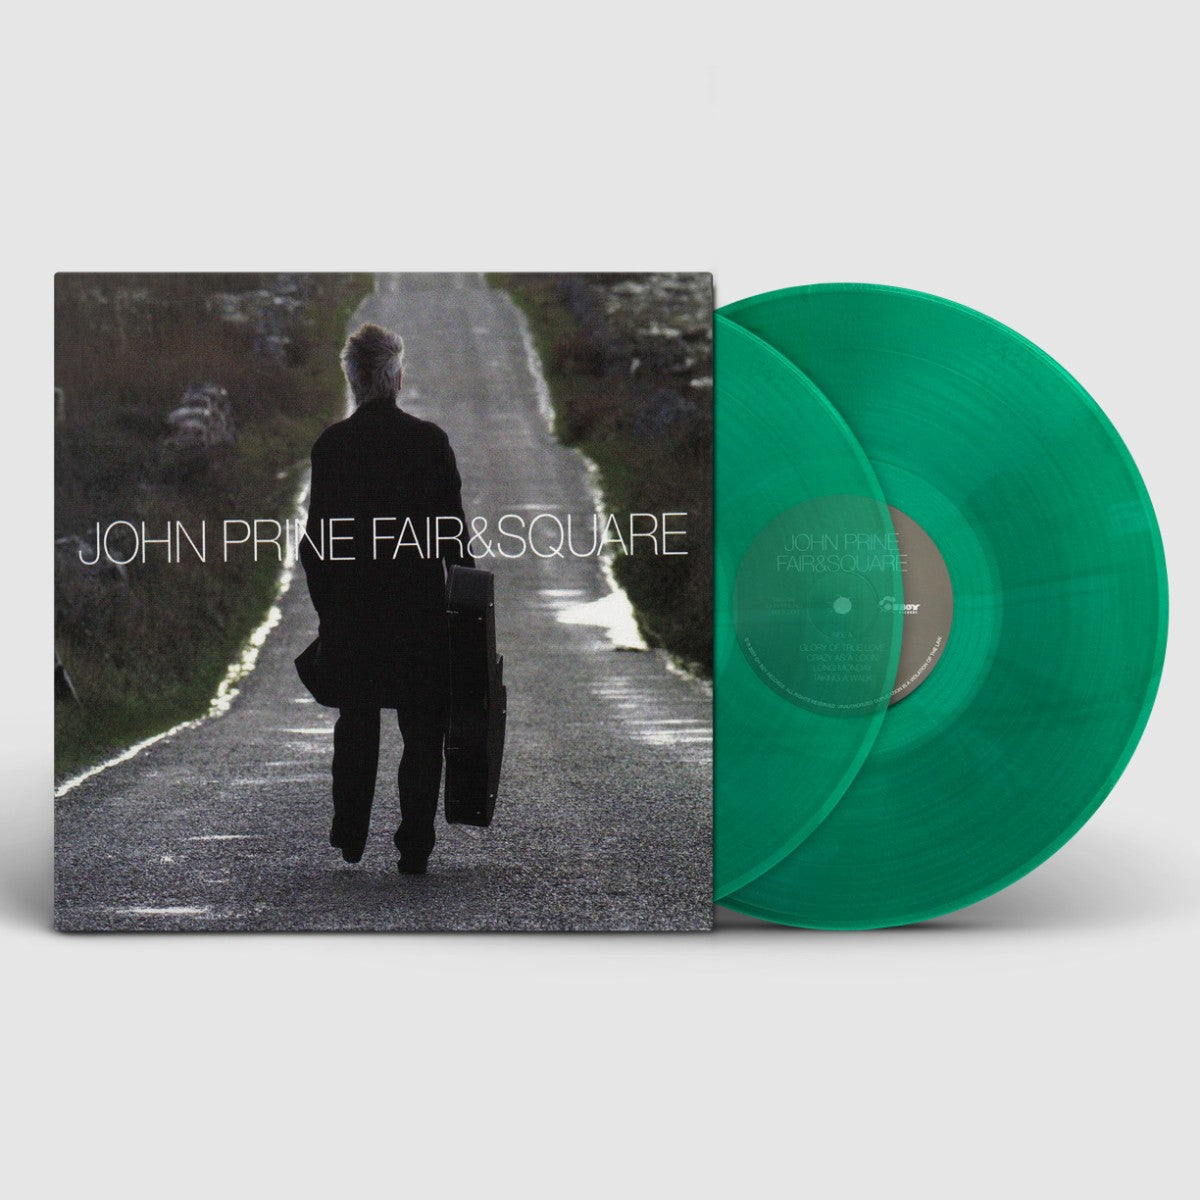 John Prine - Fair & Square [Limited Green Vinyl LP]